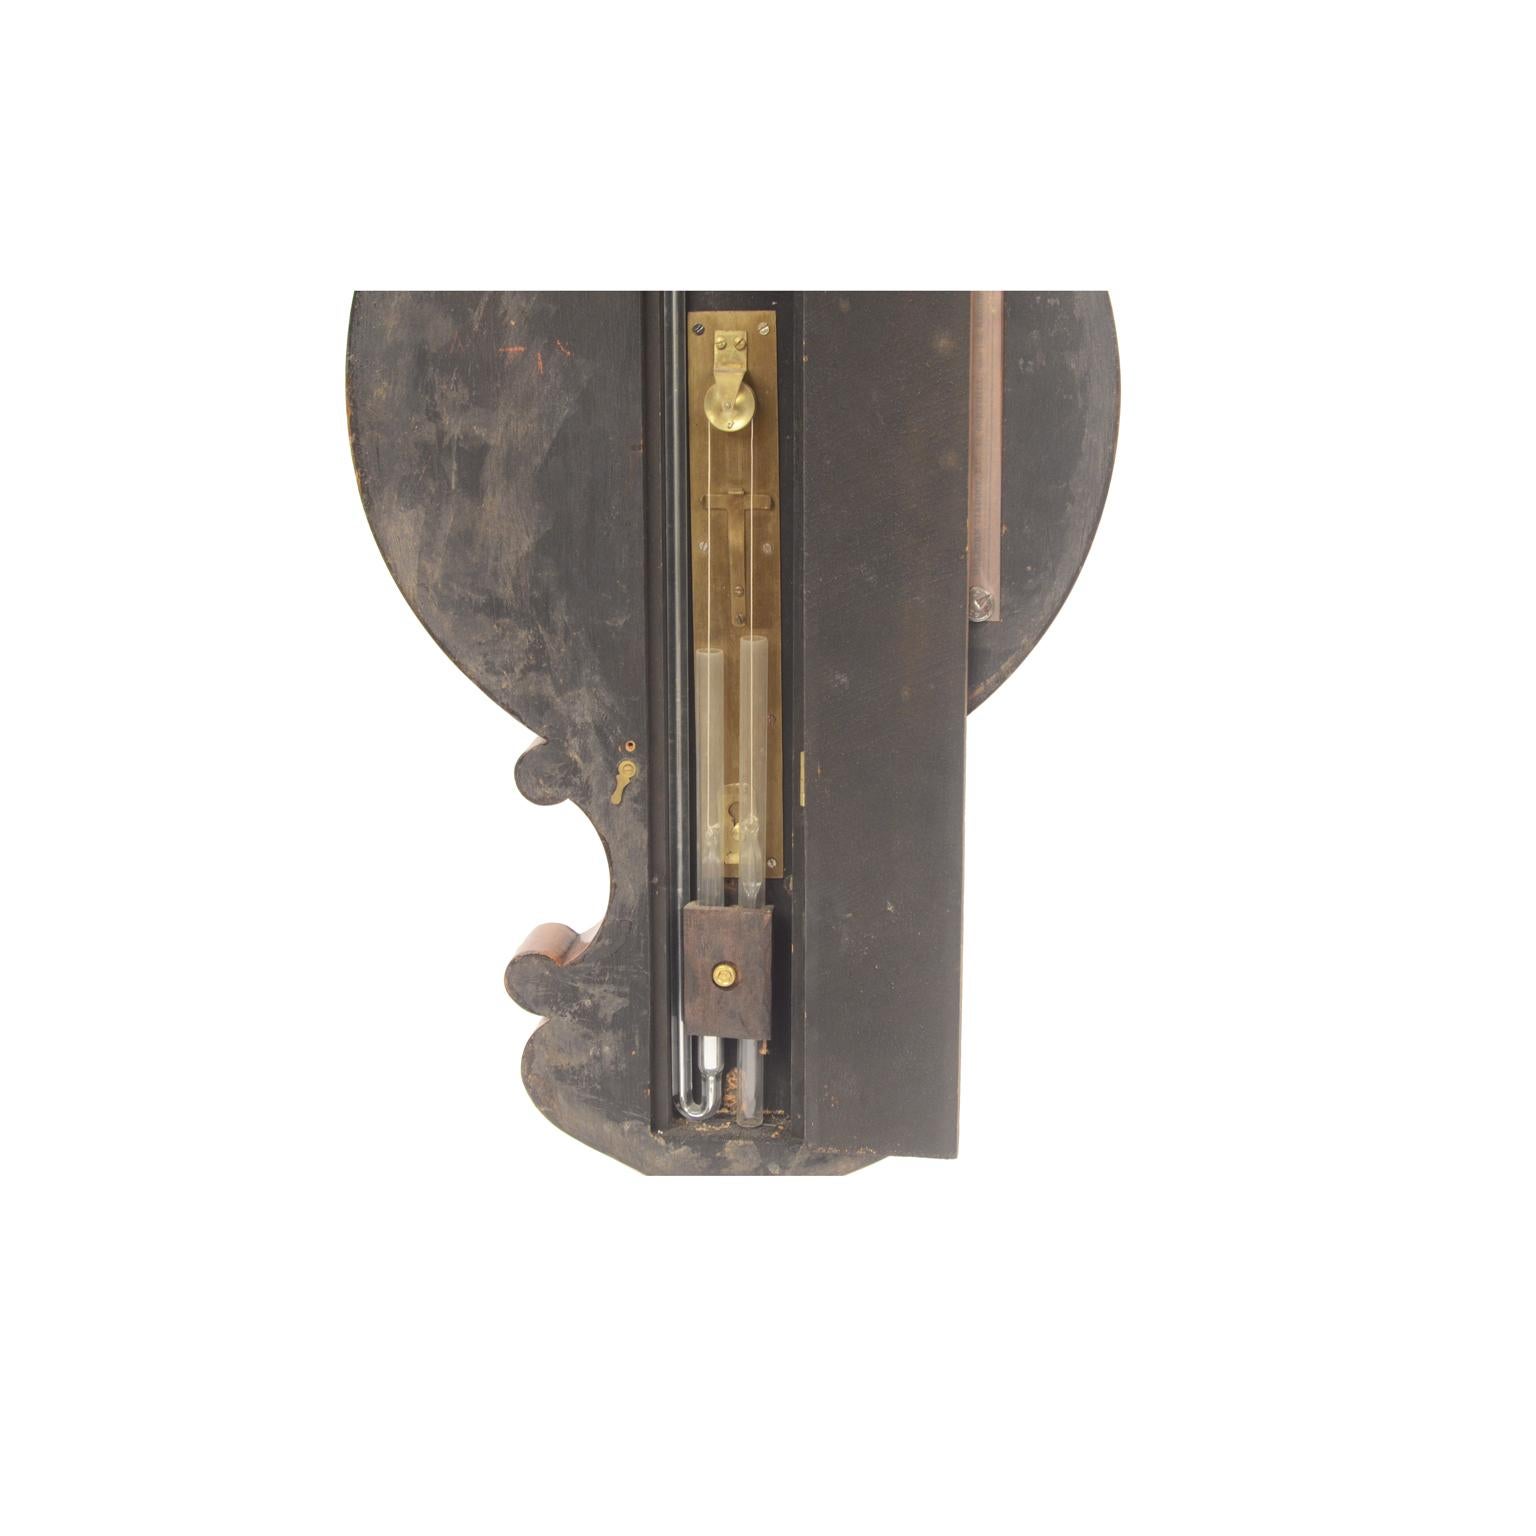 1860s Torricellian Barometer Oak Wood Negretti & Zambra Old Weather Instrument For Sale 8